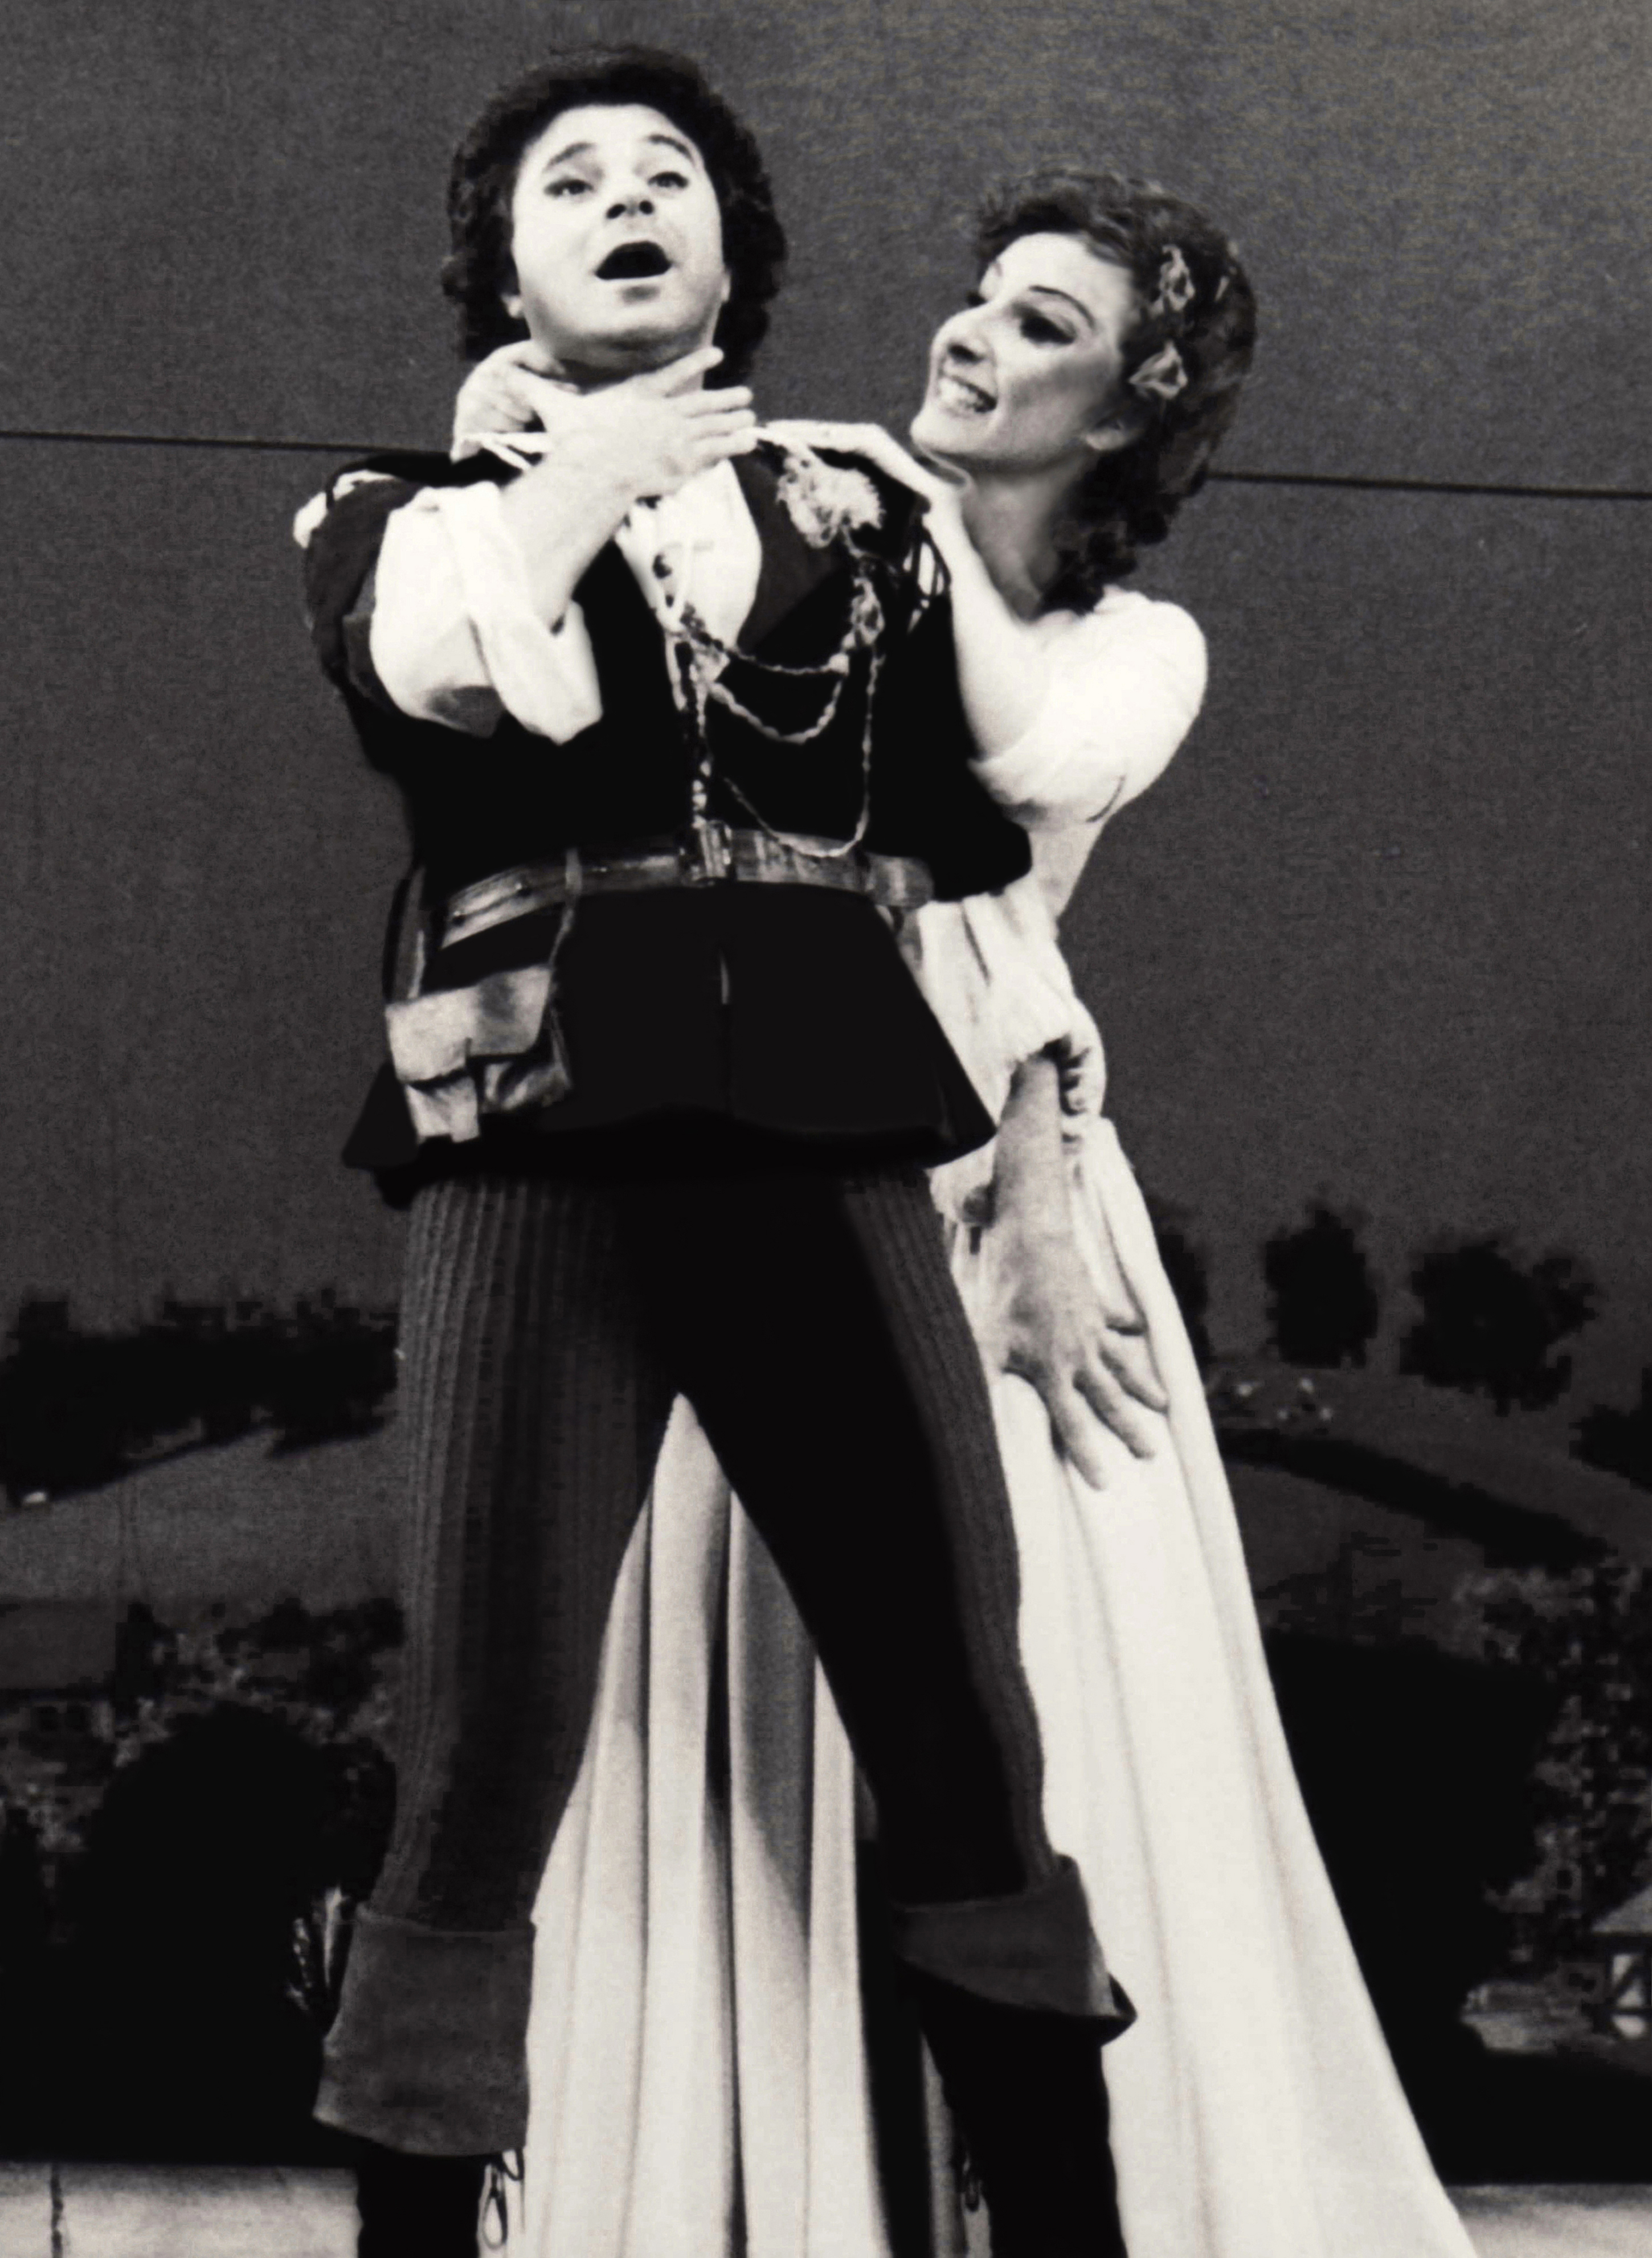 Lucia Aliberti with the tenor Max René Cossotti⚘Glyndebourne Festival Opera⚘Glyndebourne⚘Opera⚘"Falstaff"⚘On Stage⚘Photo taken from the TV News⚘TV Portrait⚘:http://www.luciaaliberti.it #luciaaliberti #maxrenecossotti #glyndebournefestivalopera #glyndebourne #falstaff #opera #onstage #tvnews #tvportrait